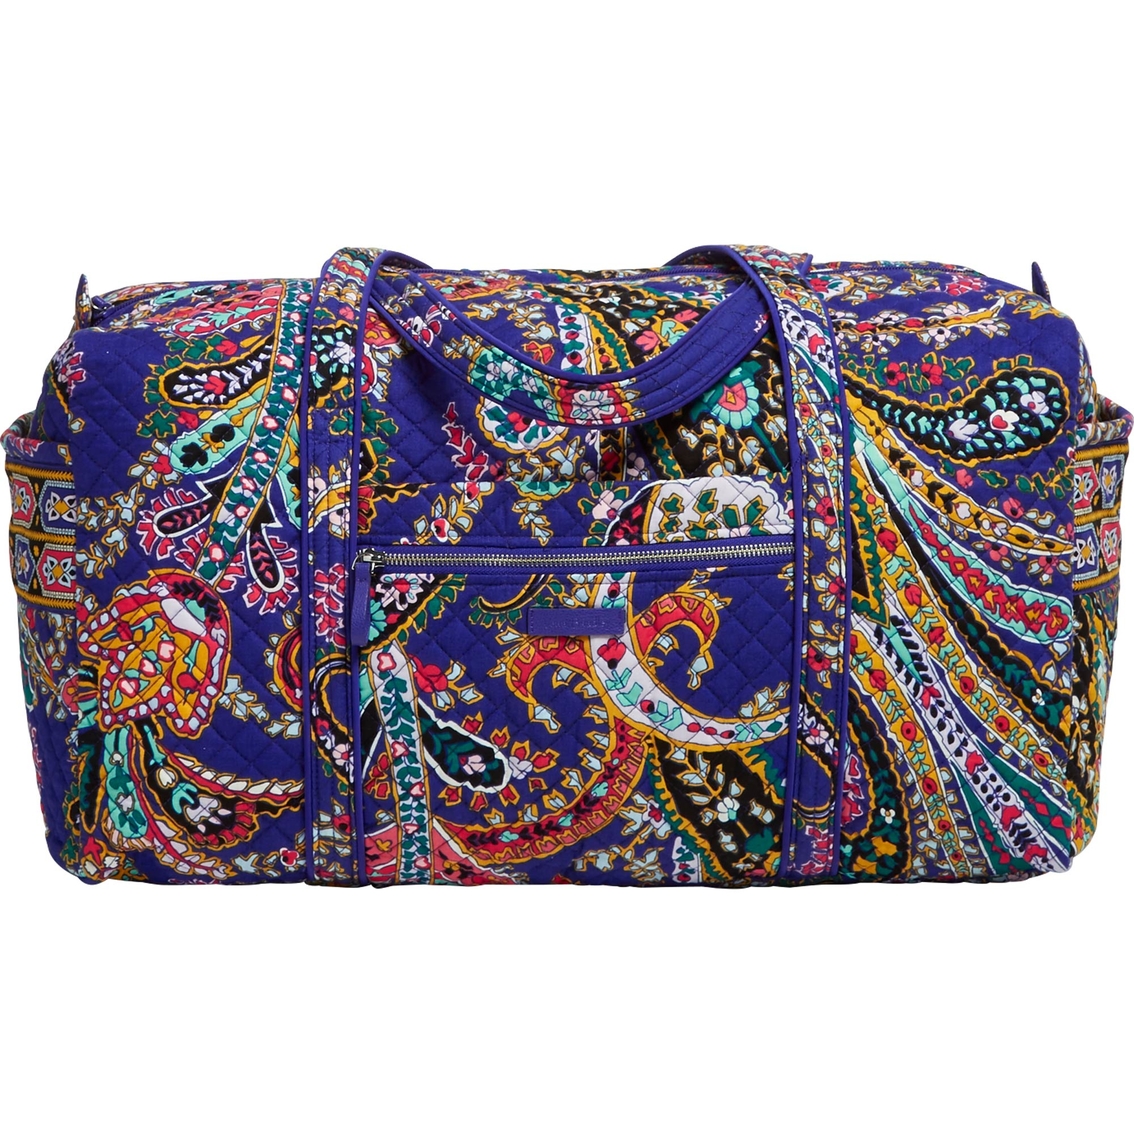 Vera Bradley Iconic Large Travel Duffel Bag, Romantic Paisley | Shop By Pattern | Shop The Exchange